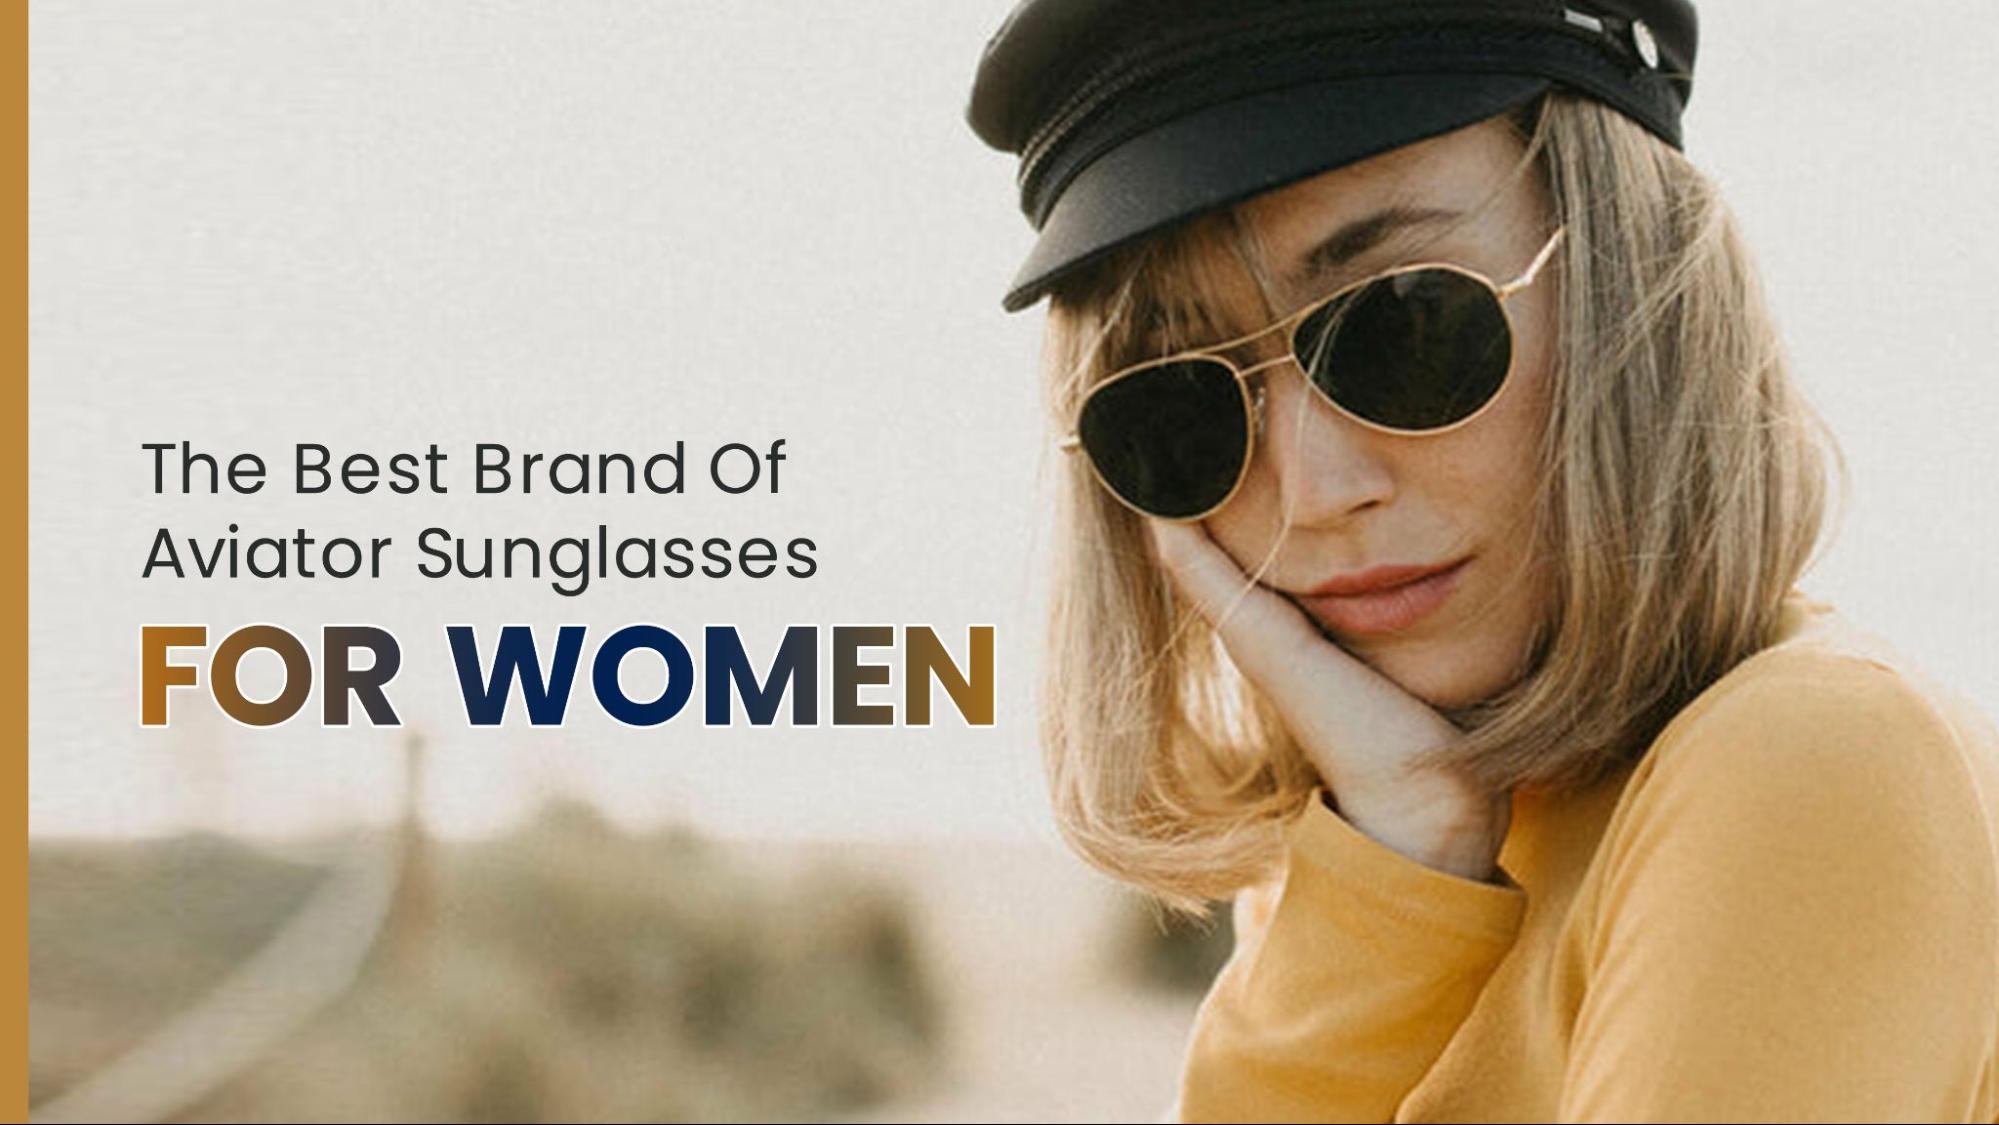 The Best Brand of Aviator Sunglasses For Women